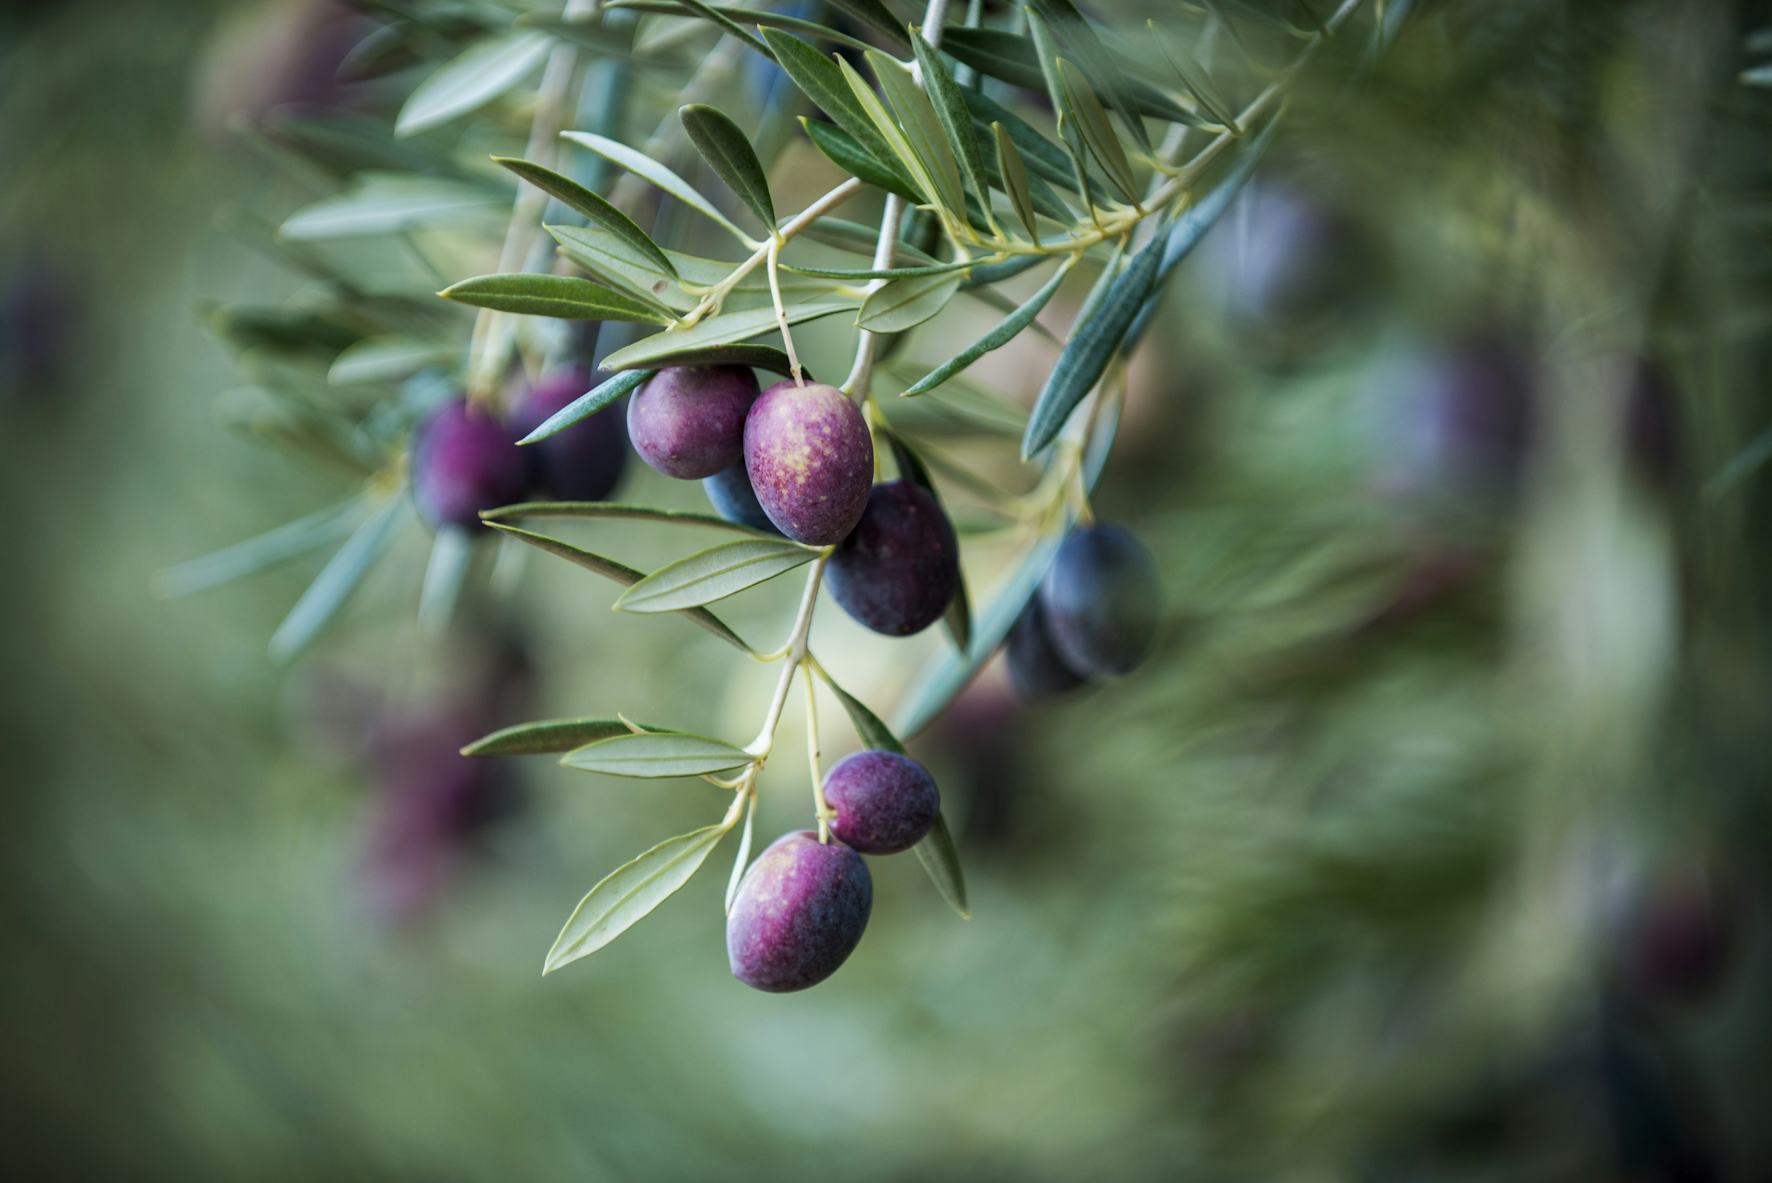 Olive fruit. Image source: Sustainability Victoria